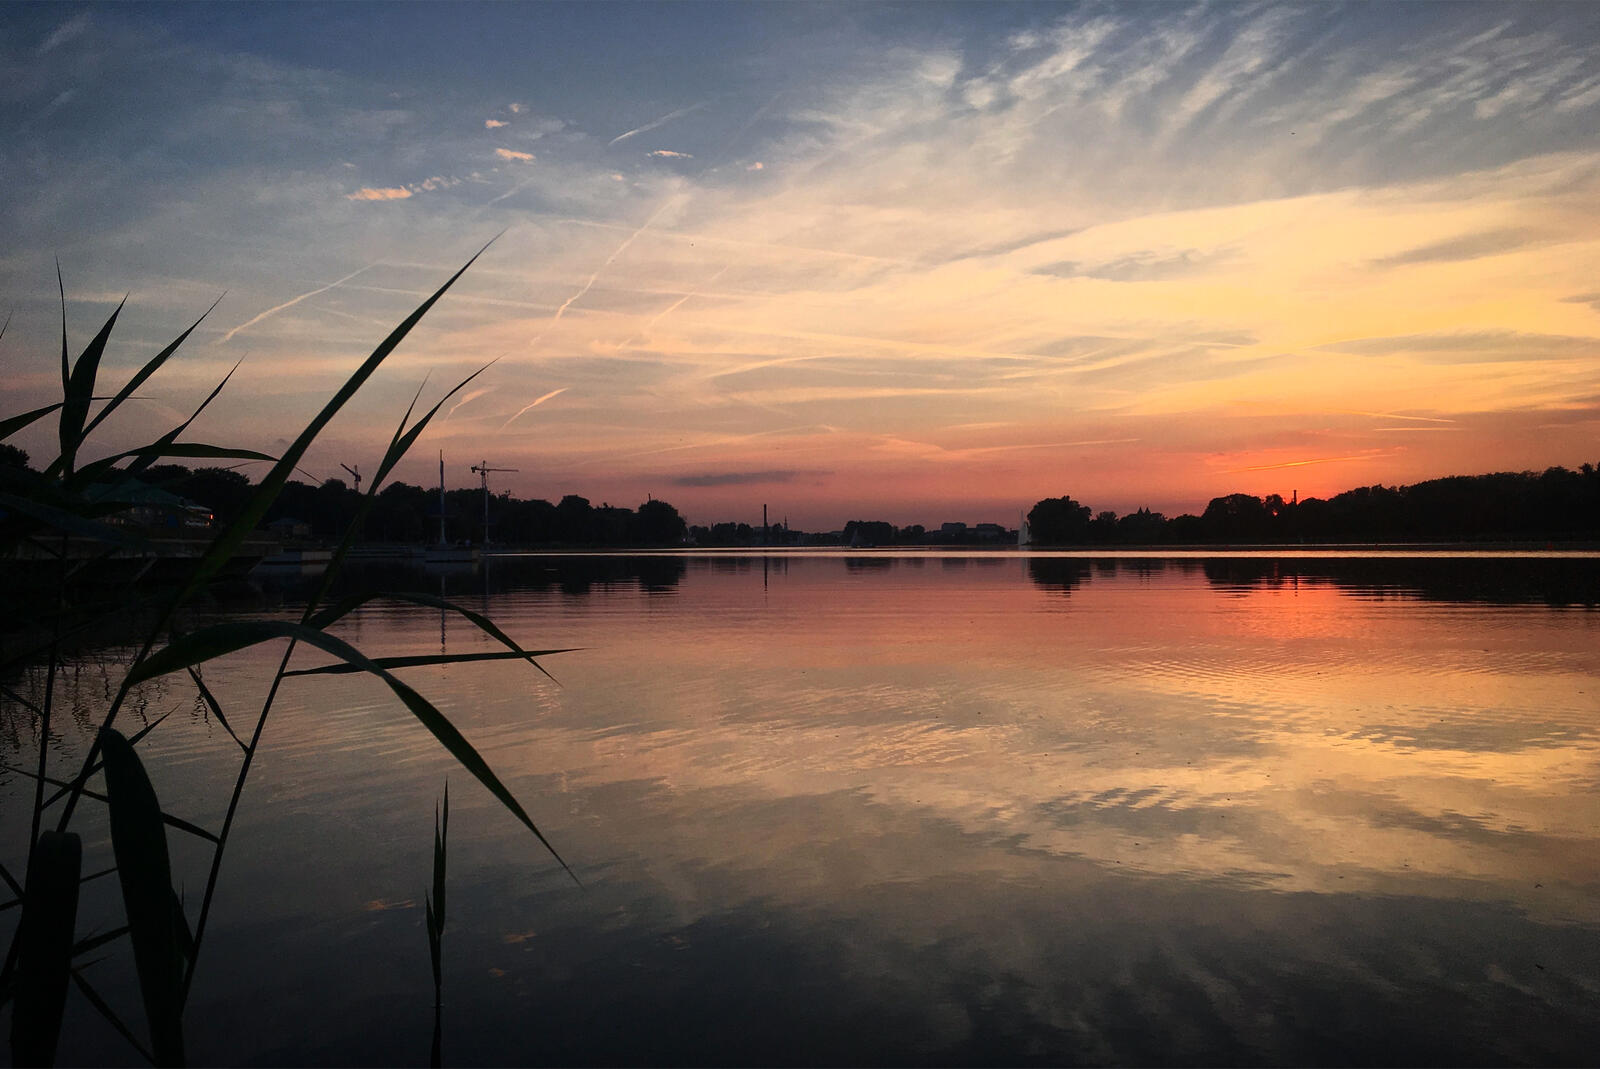 Бесплатное фото Вечерний закат на летнем озере